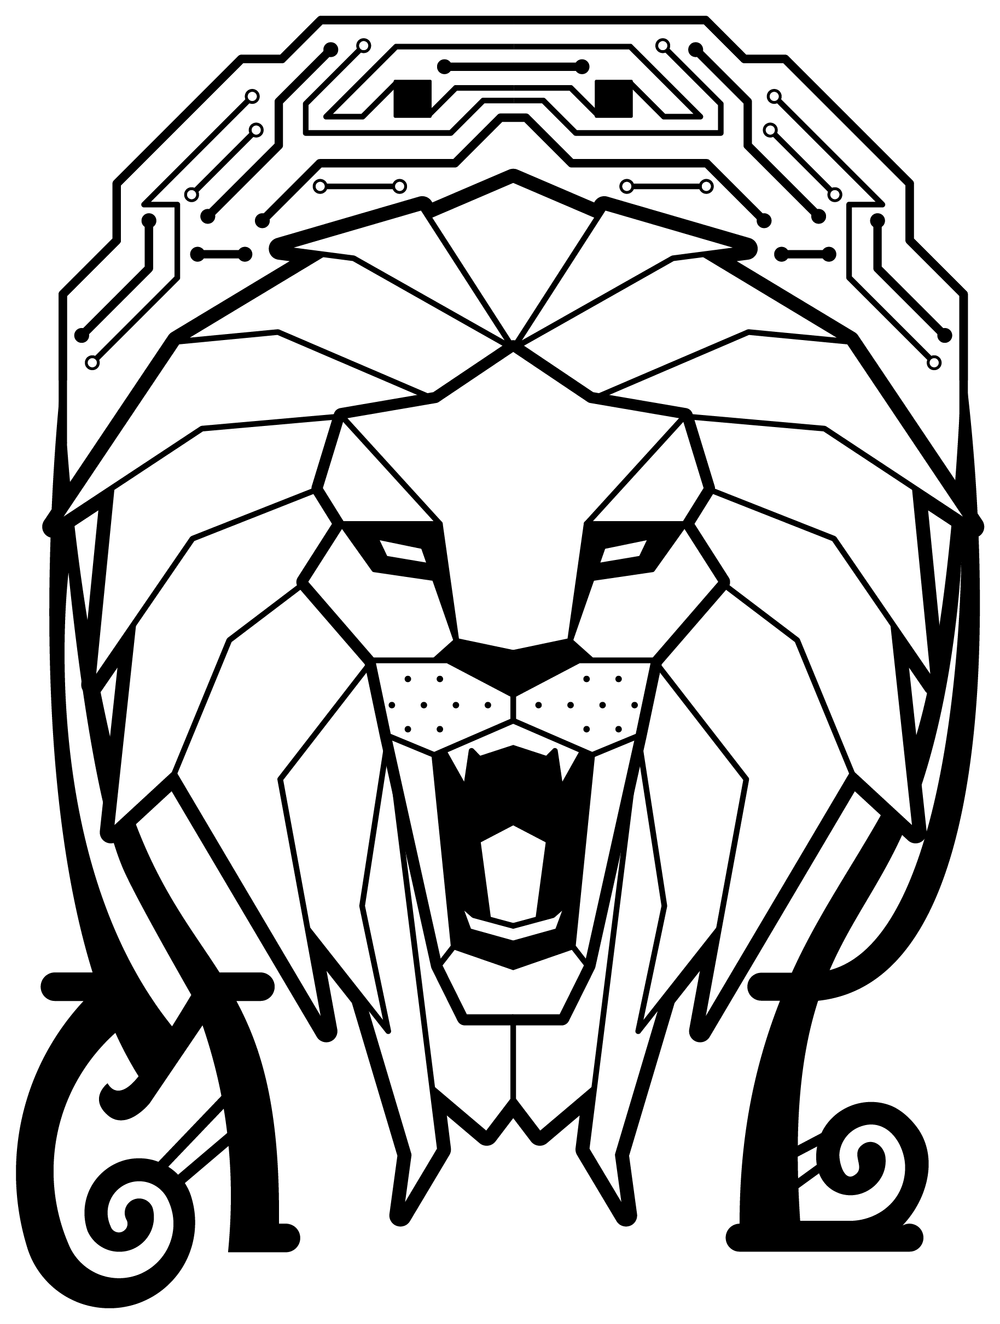 Magnetica Leoni logo by Lighthouse / Okapi Grafica